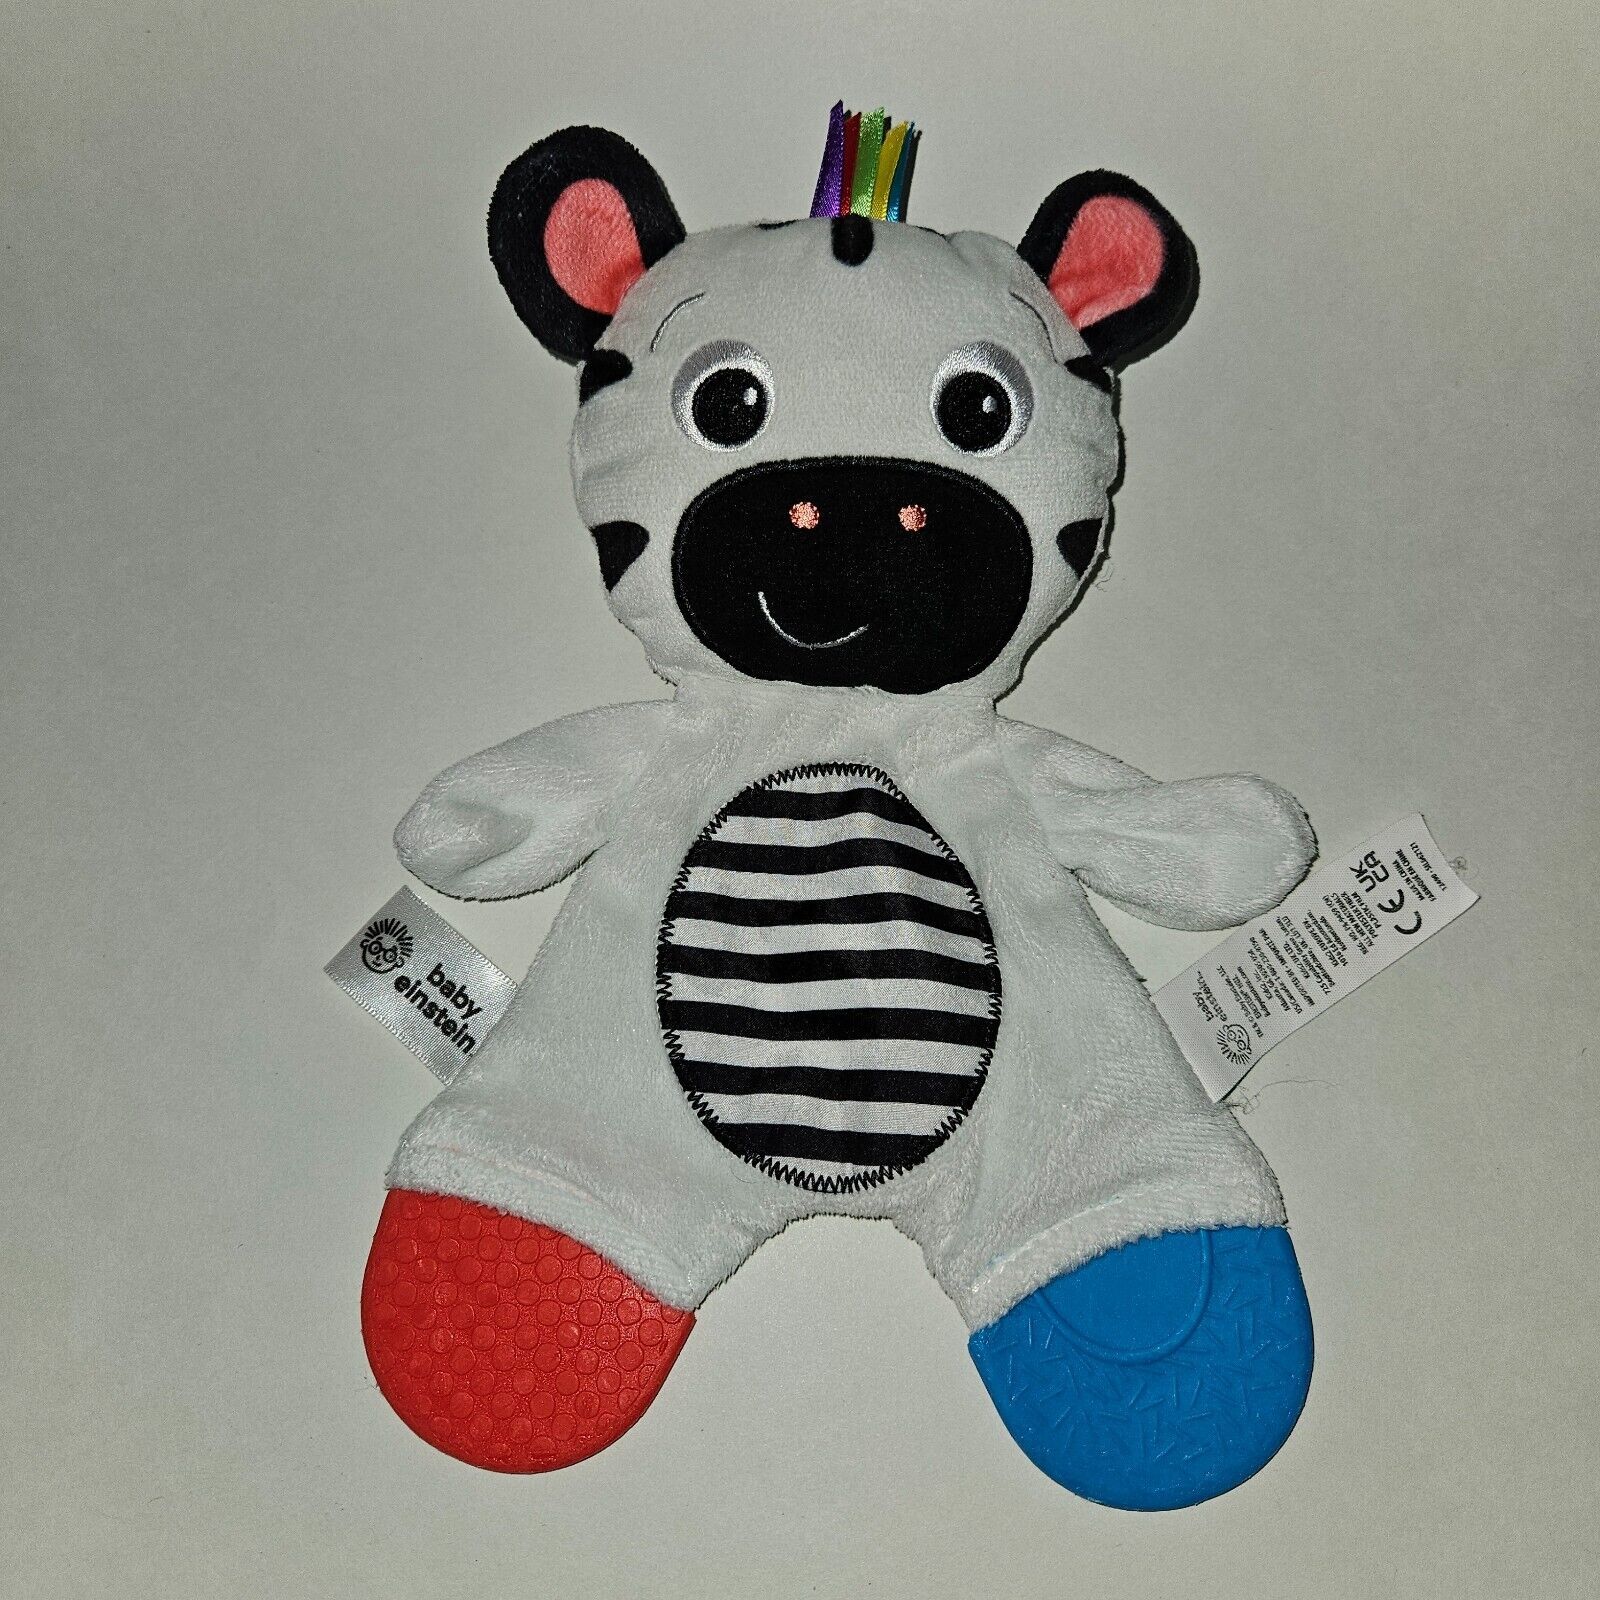 Baby Einstein Zebra Plush Teether Baby Stuffed Animal Toy Lovey - $9.85